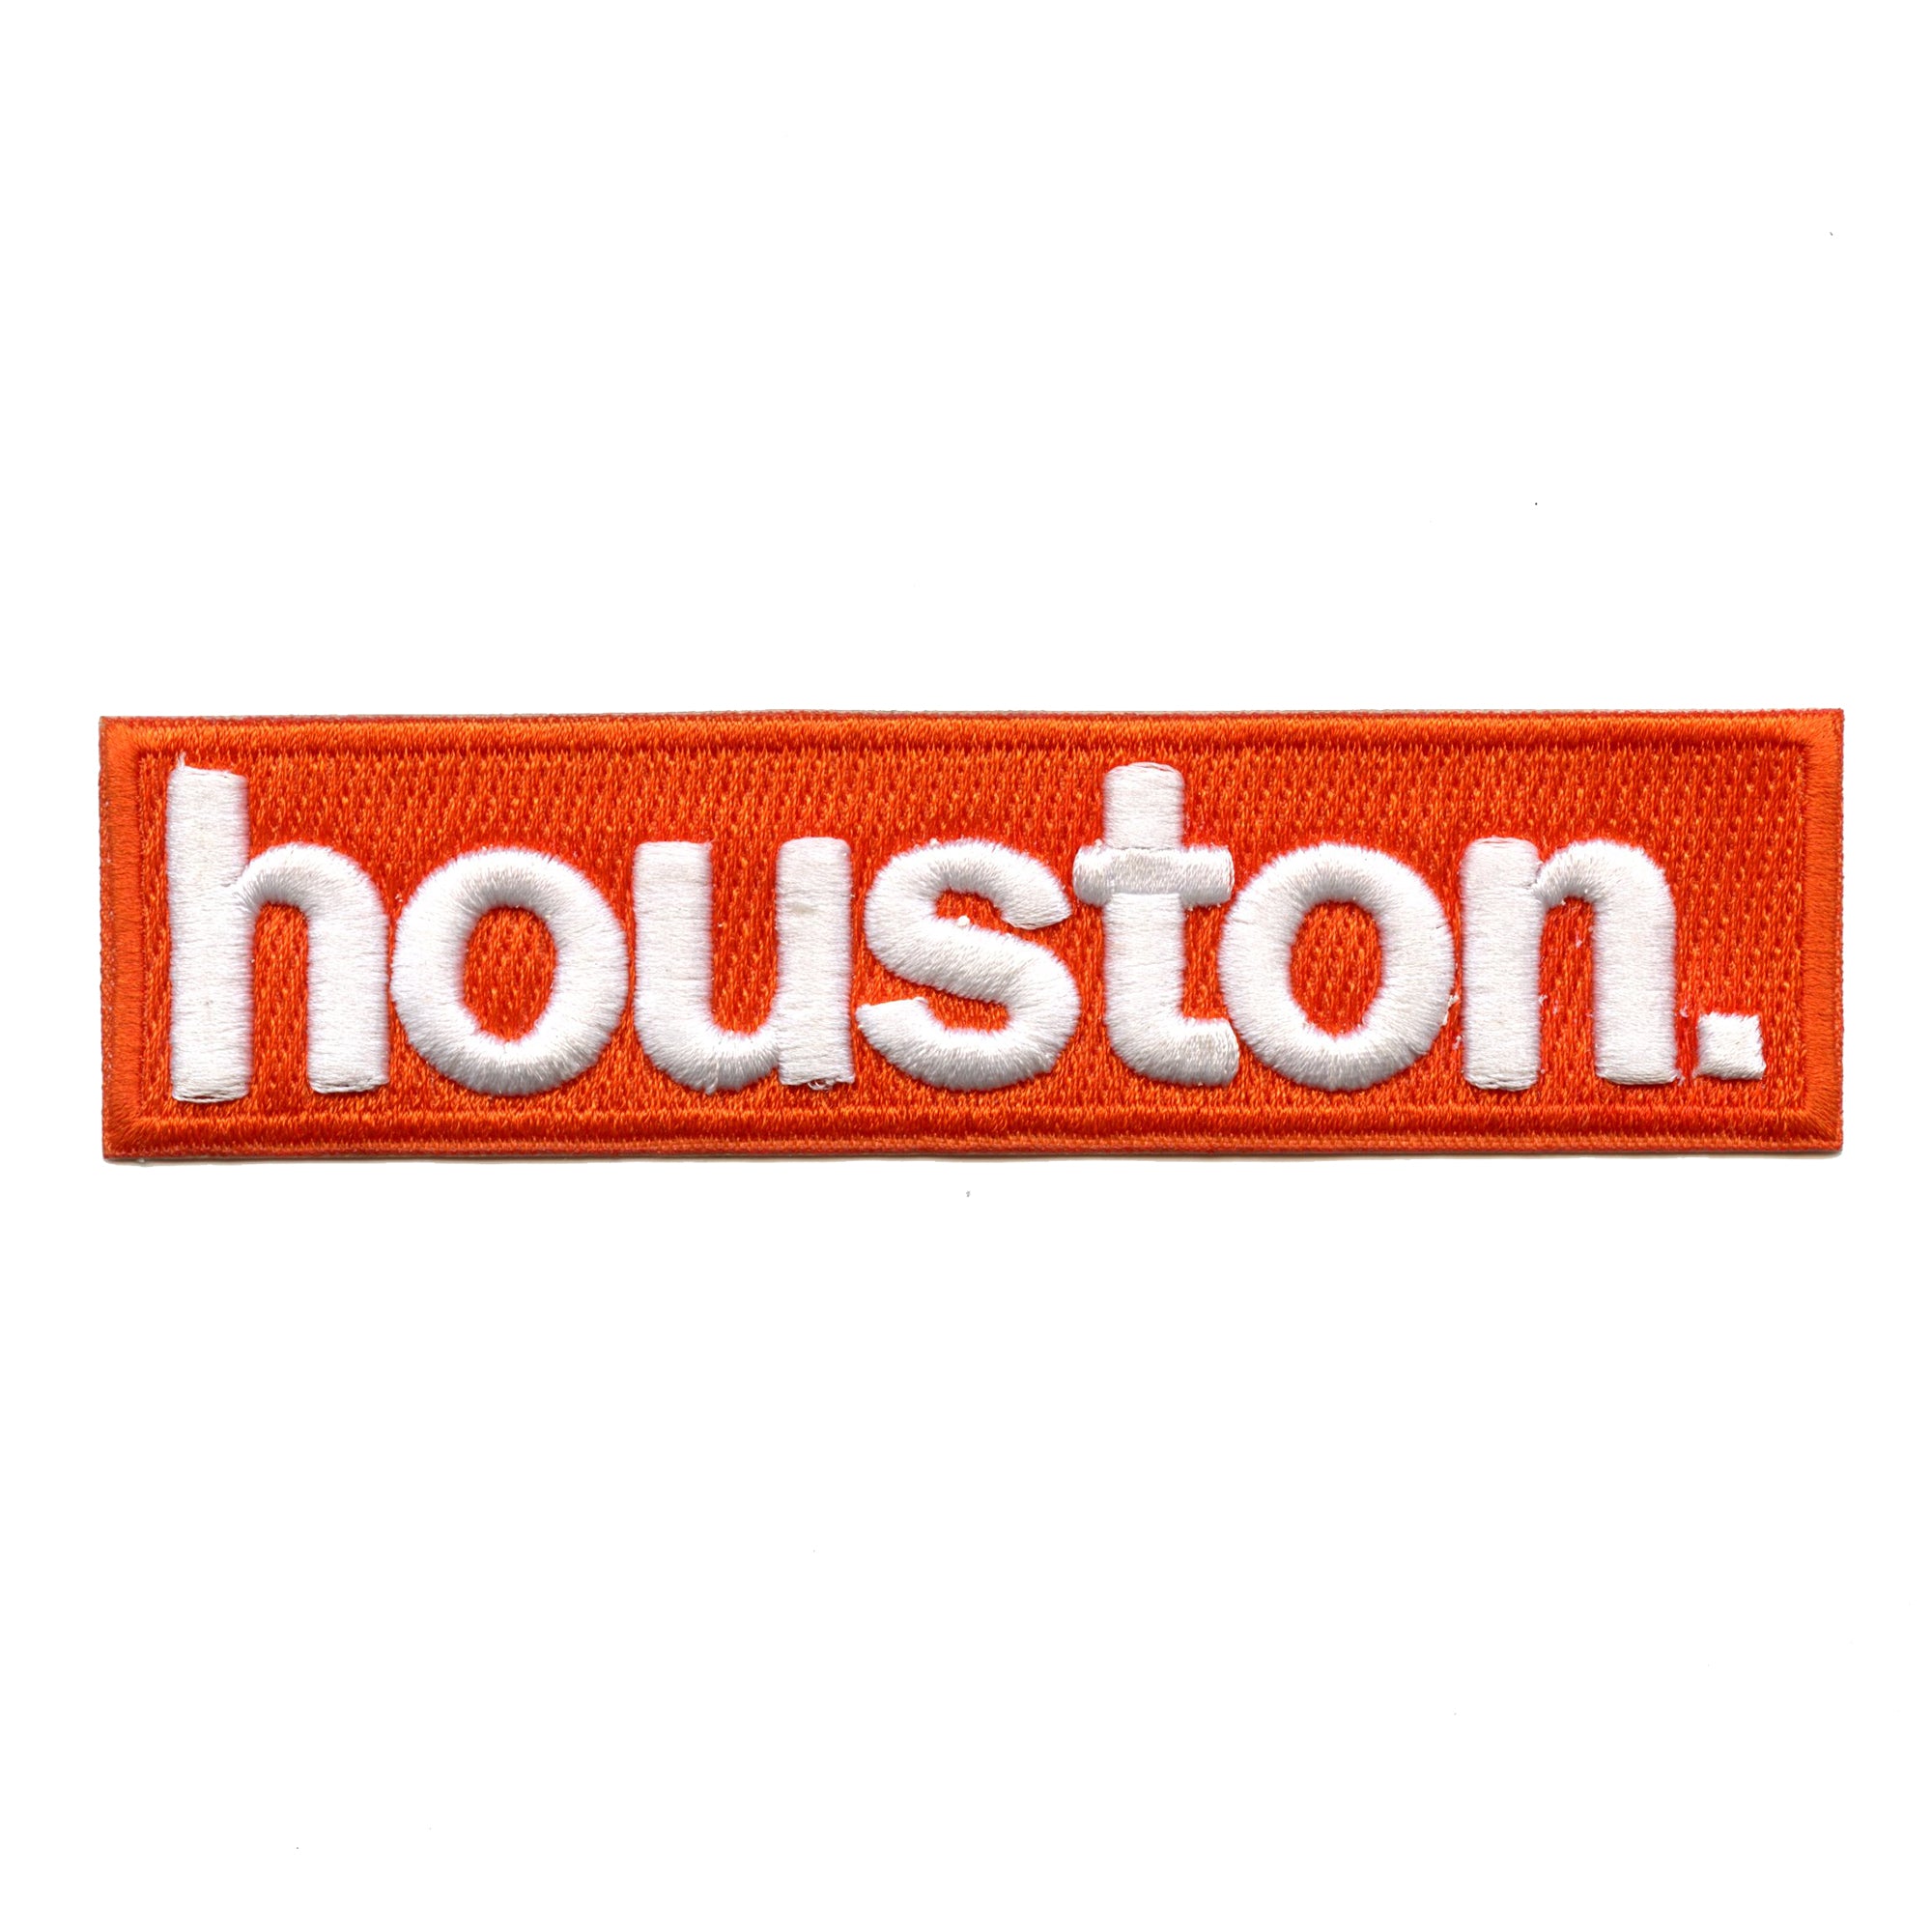 Houston Patch